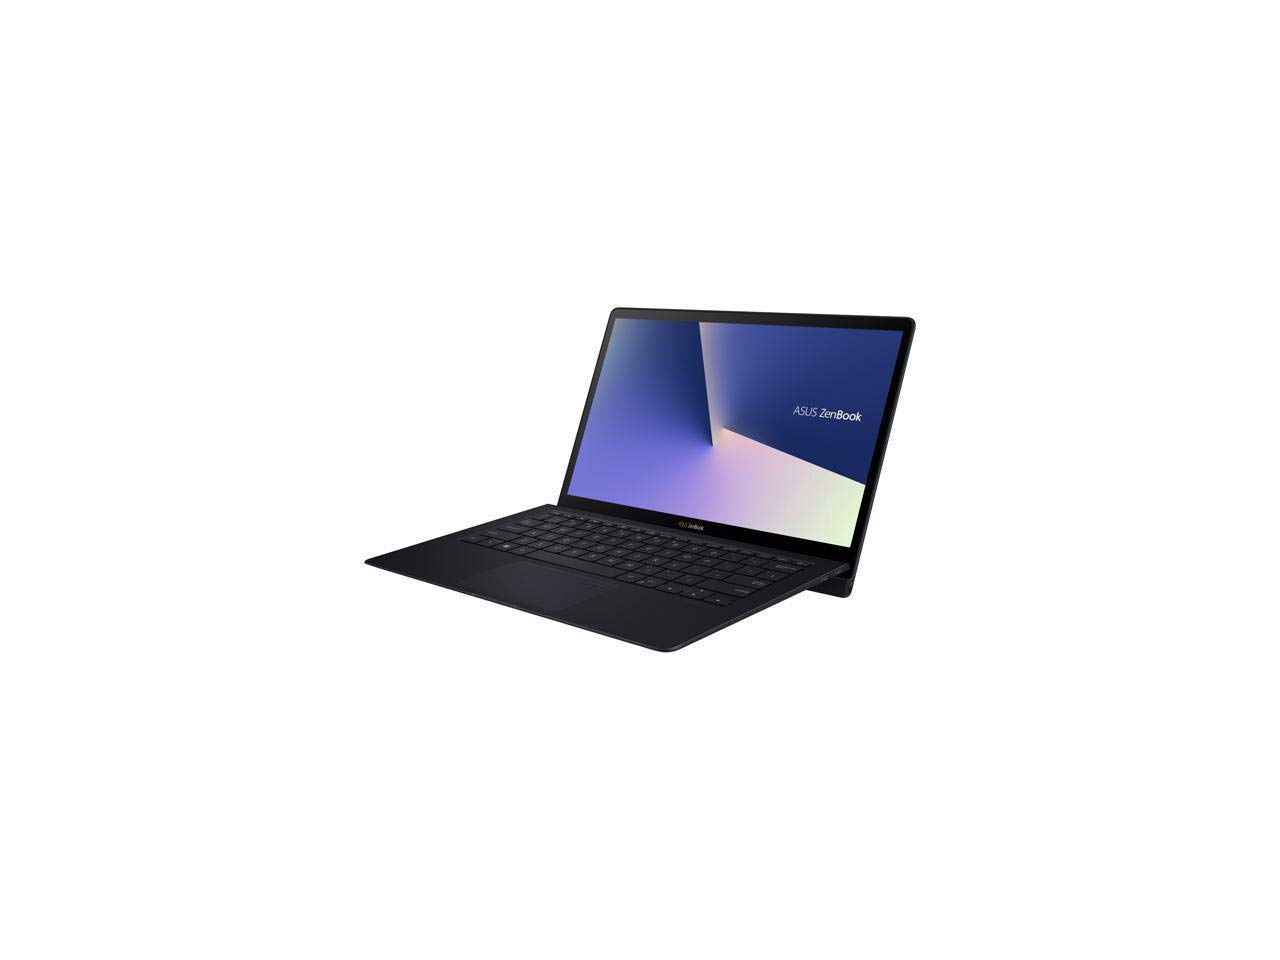 ASUS ZenBook S Ultra-Thin & Light Laptop 13.3 inches UHD 4K Touch 8th Gen Intel Core i7-8565U 16GB RAM 512GB PCIe SSD, FP Sensor, Thunderbolt, Windows 10 Pro - UX391FA-XH74T (Renewed)